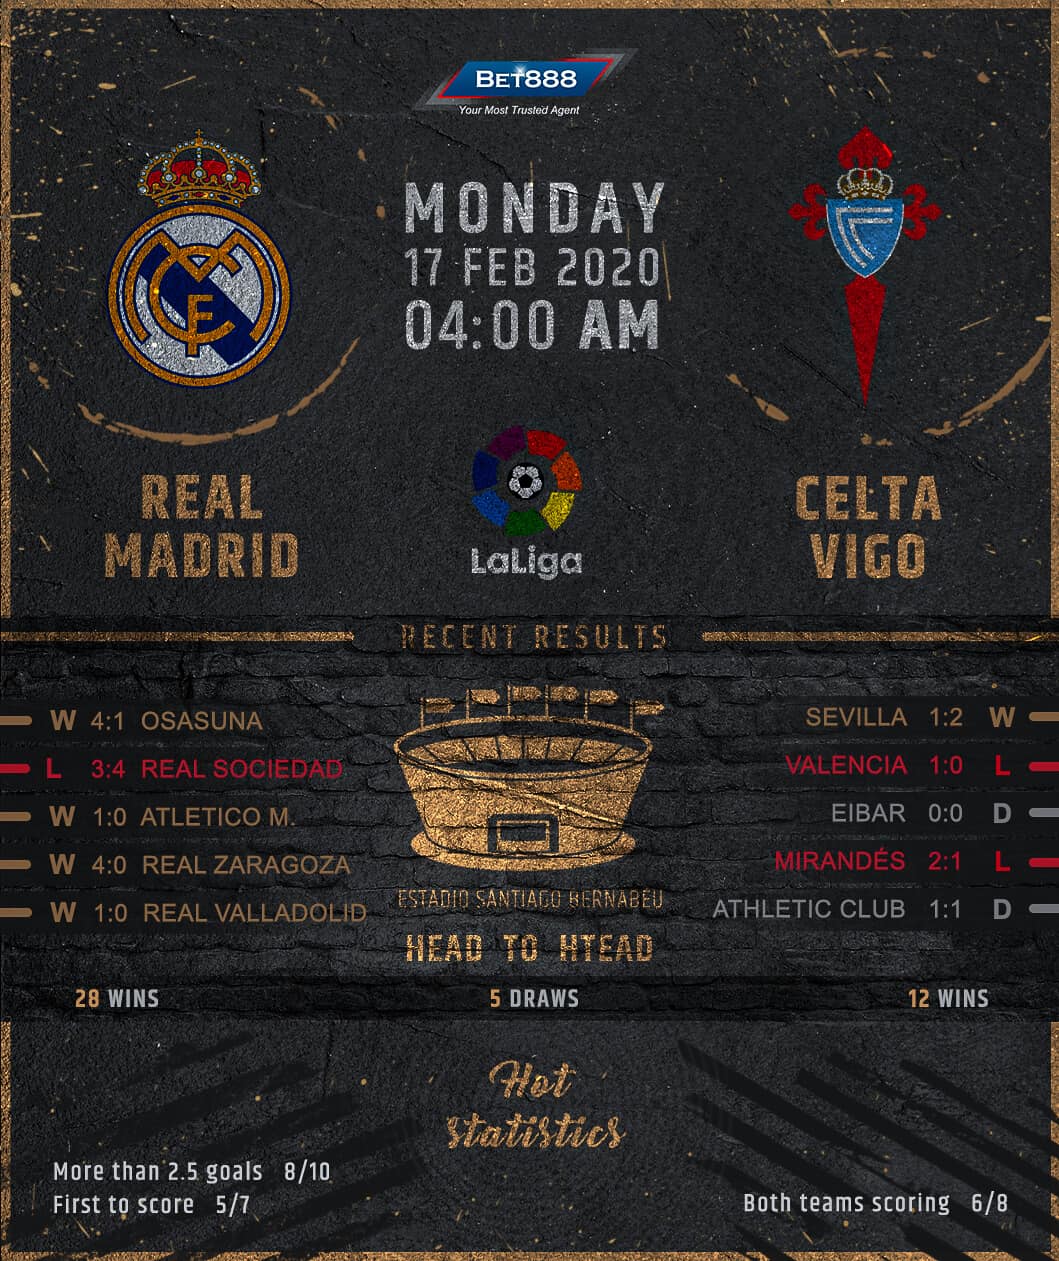 Real Madrid vs Celta Vigo 17/02/20﻿